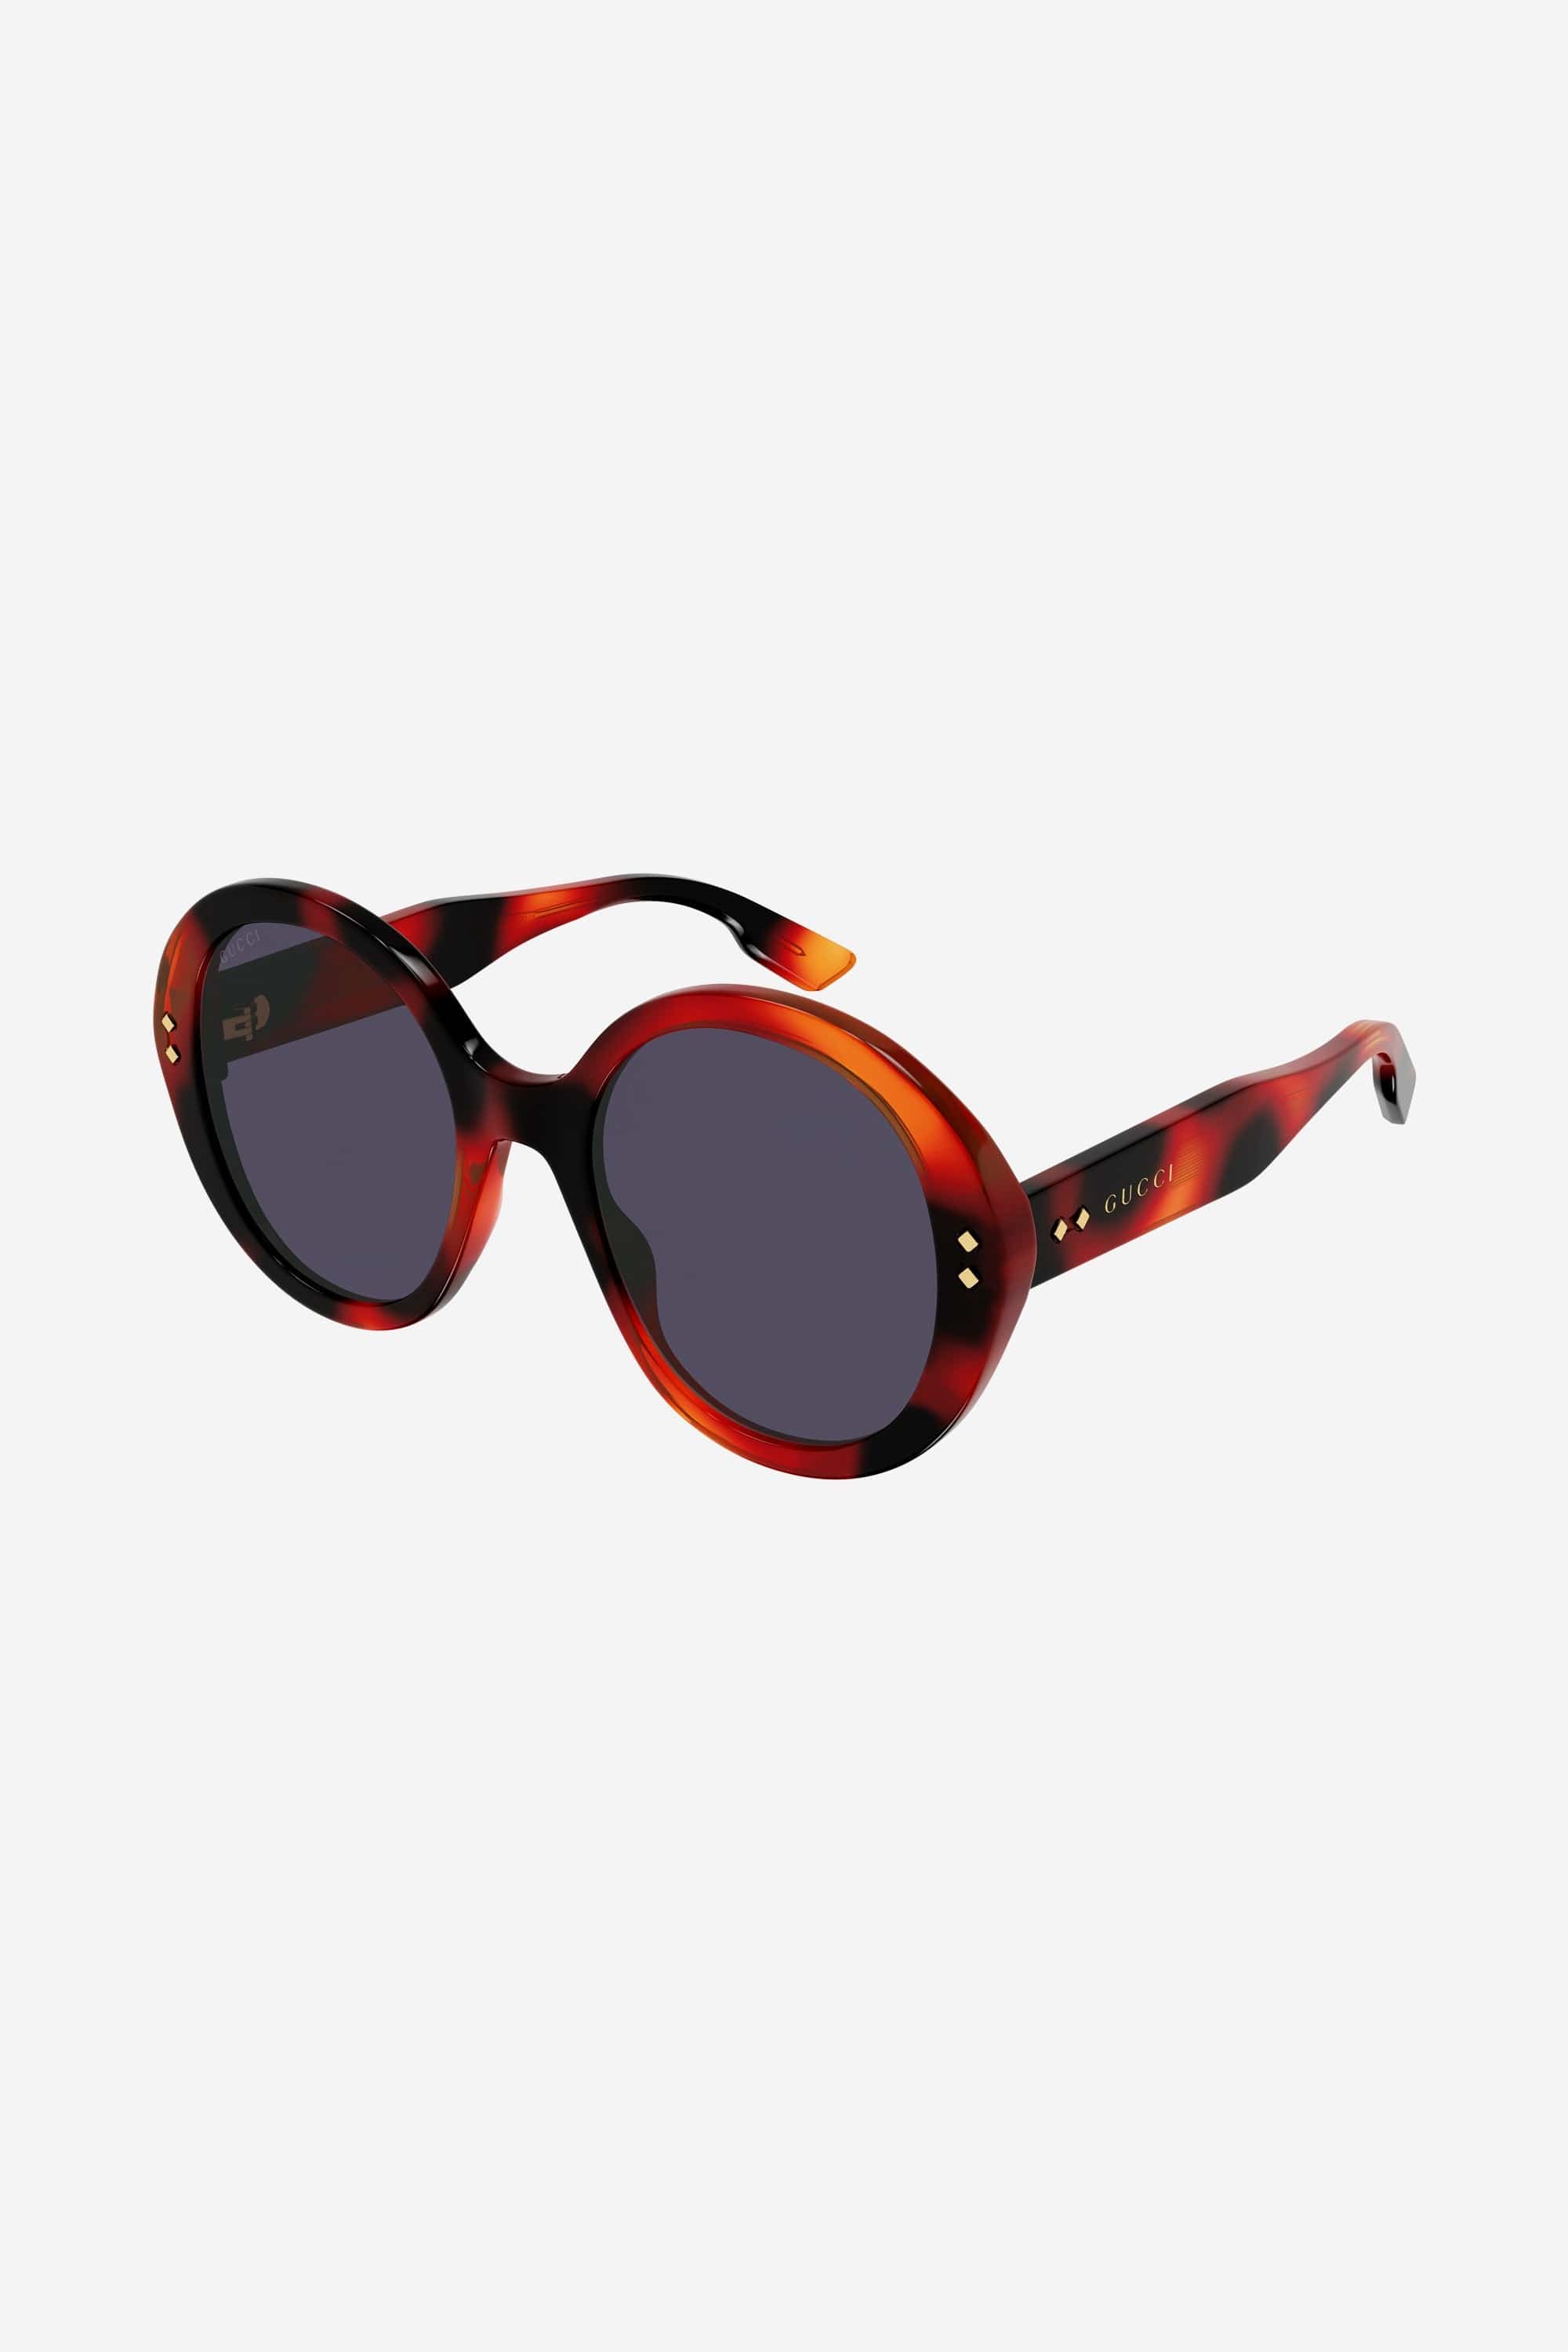 Gucci round havana sunglasses - Eyewear Club